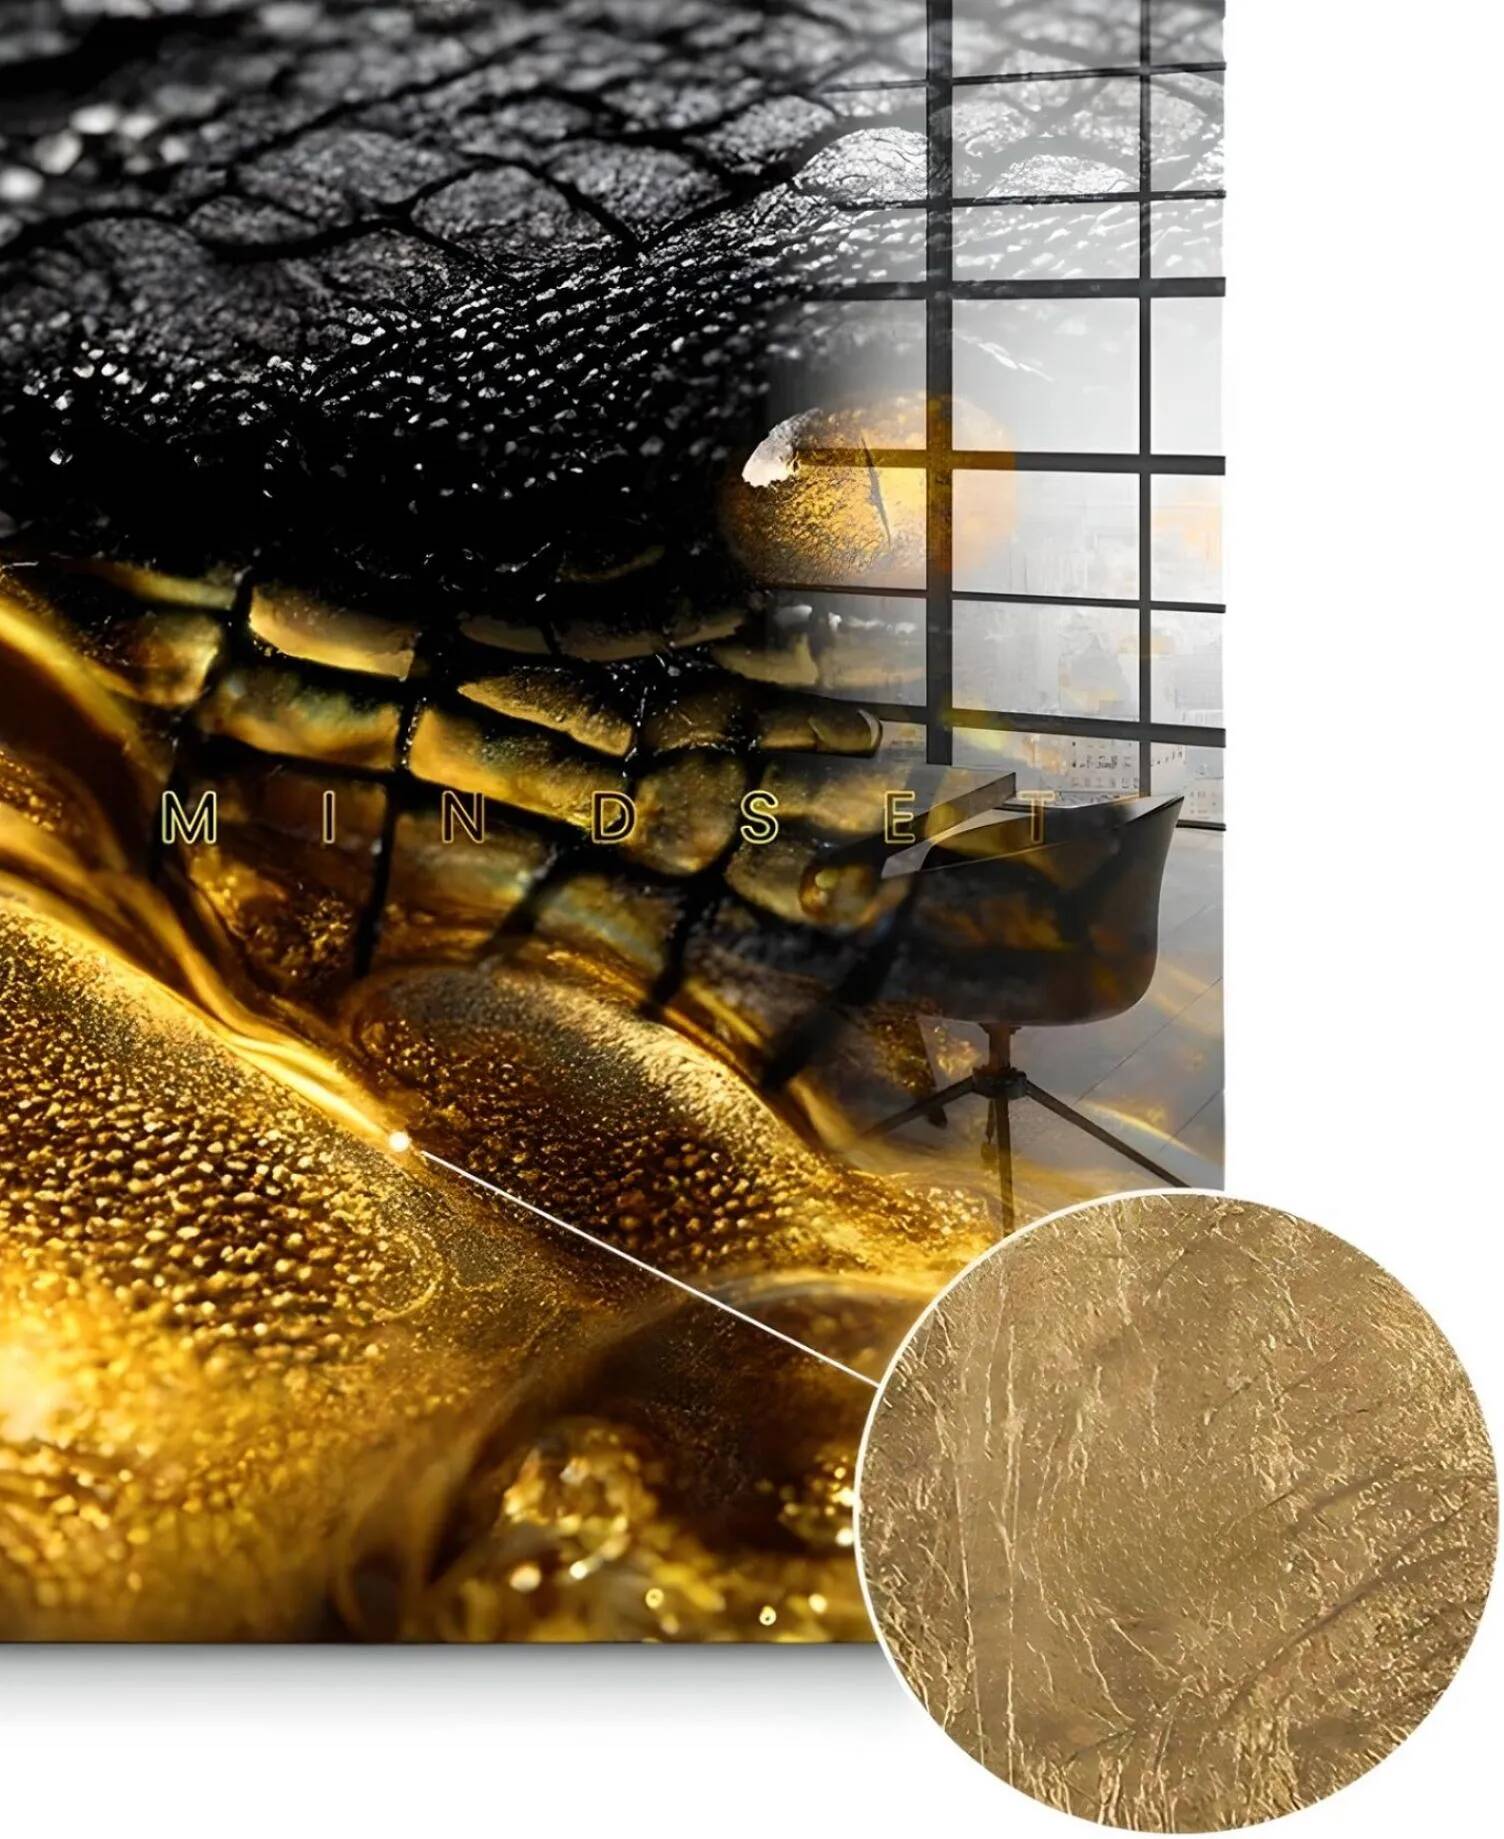 Tableau feuille d'or Gold Crocodile